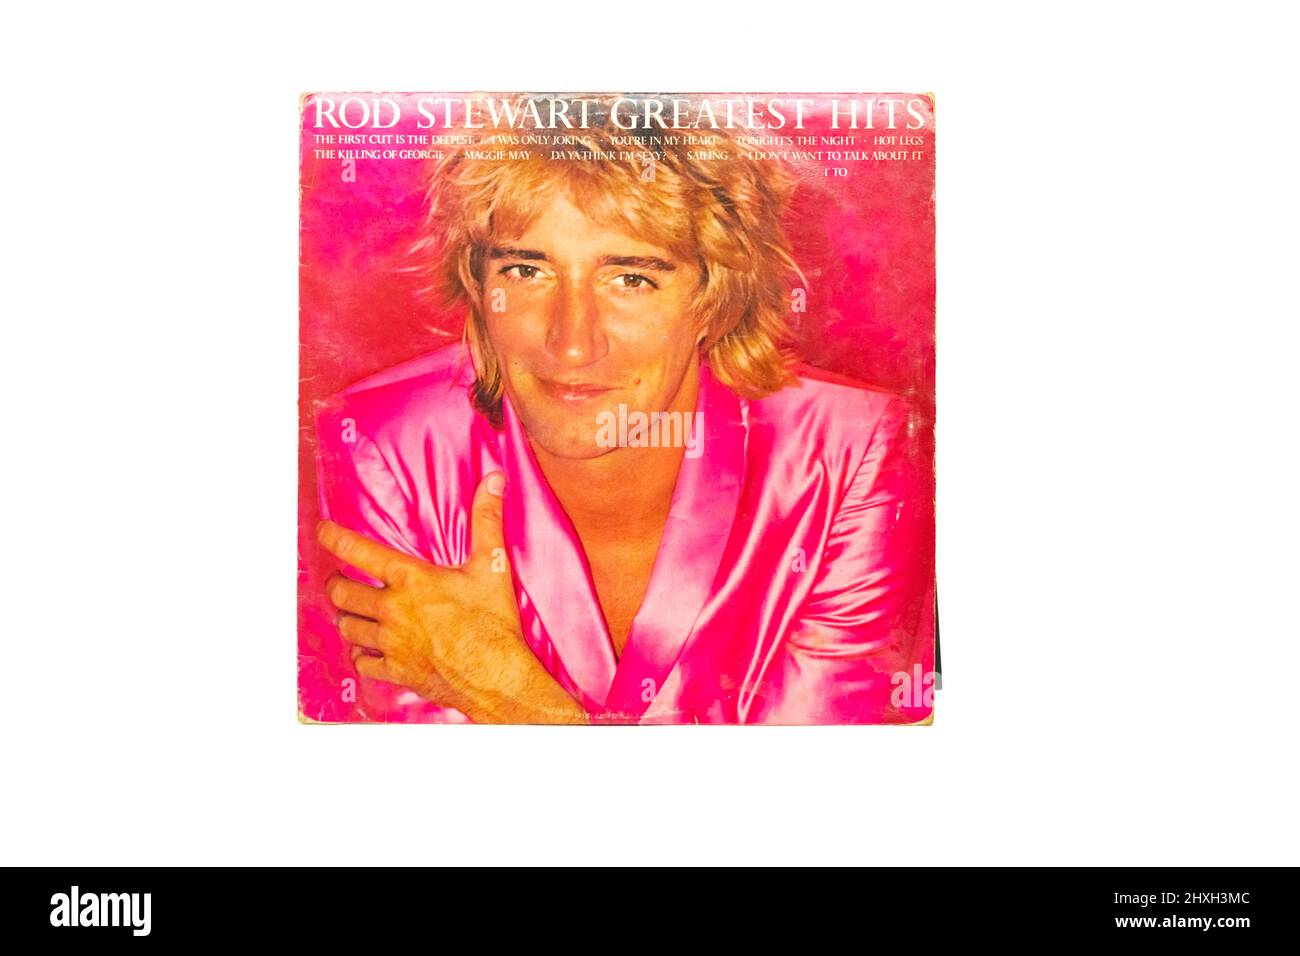 Rod stewart greatest hits vinyl LP record cover Stock Photo